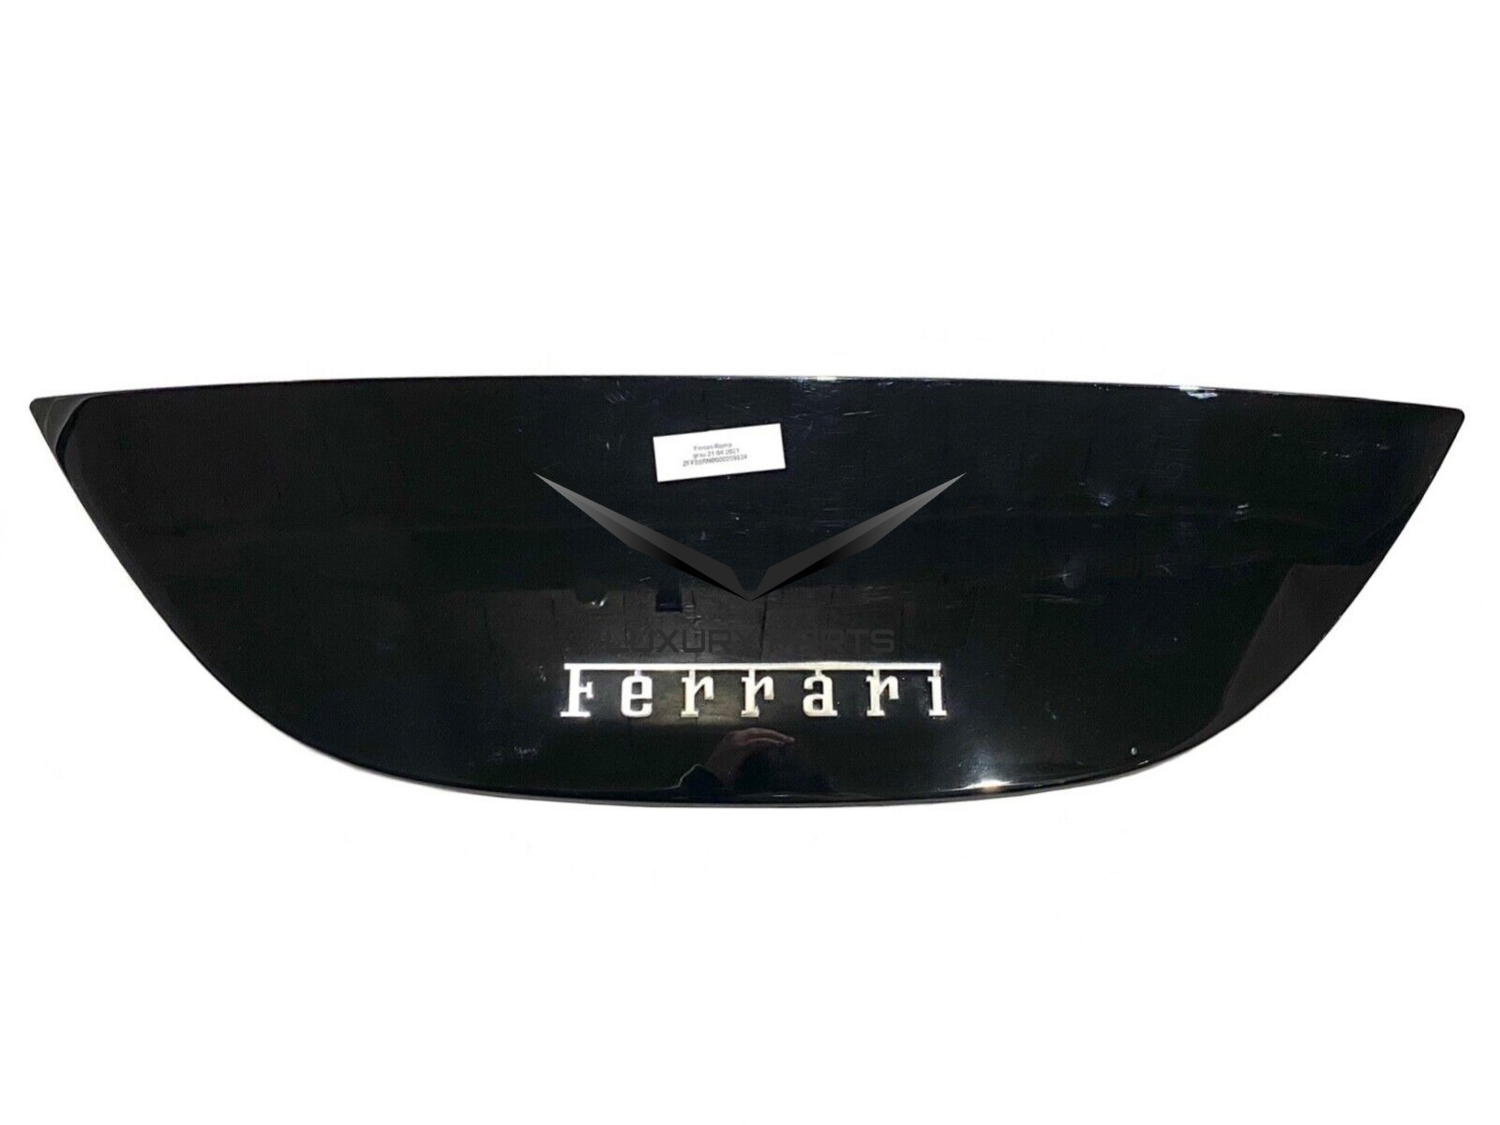 FERRARI ROMA rear spoiler wing 783009, 804585, 341568 SCHWARZ BLACK